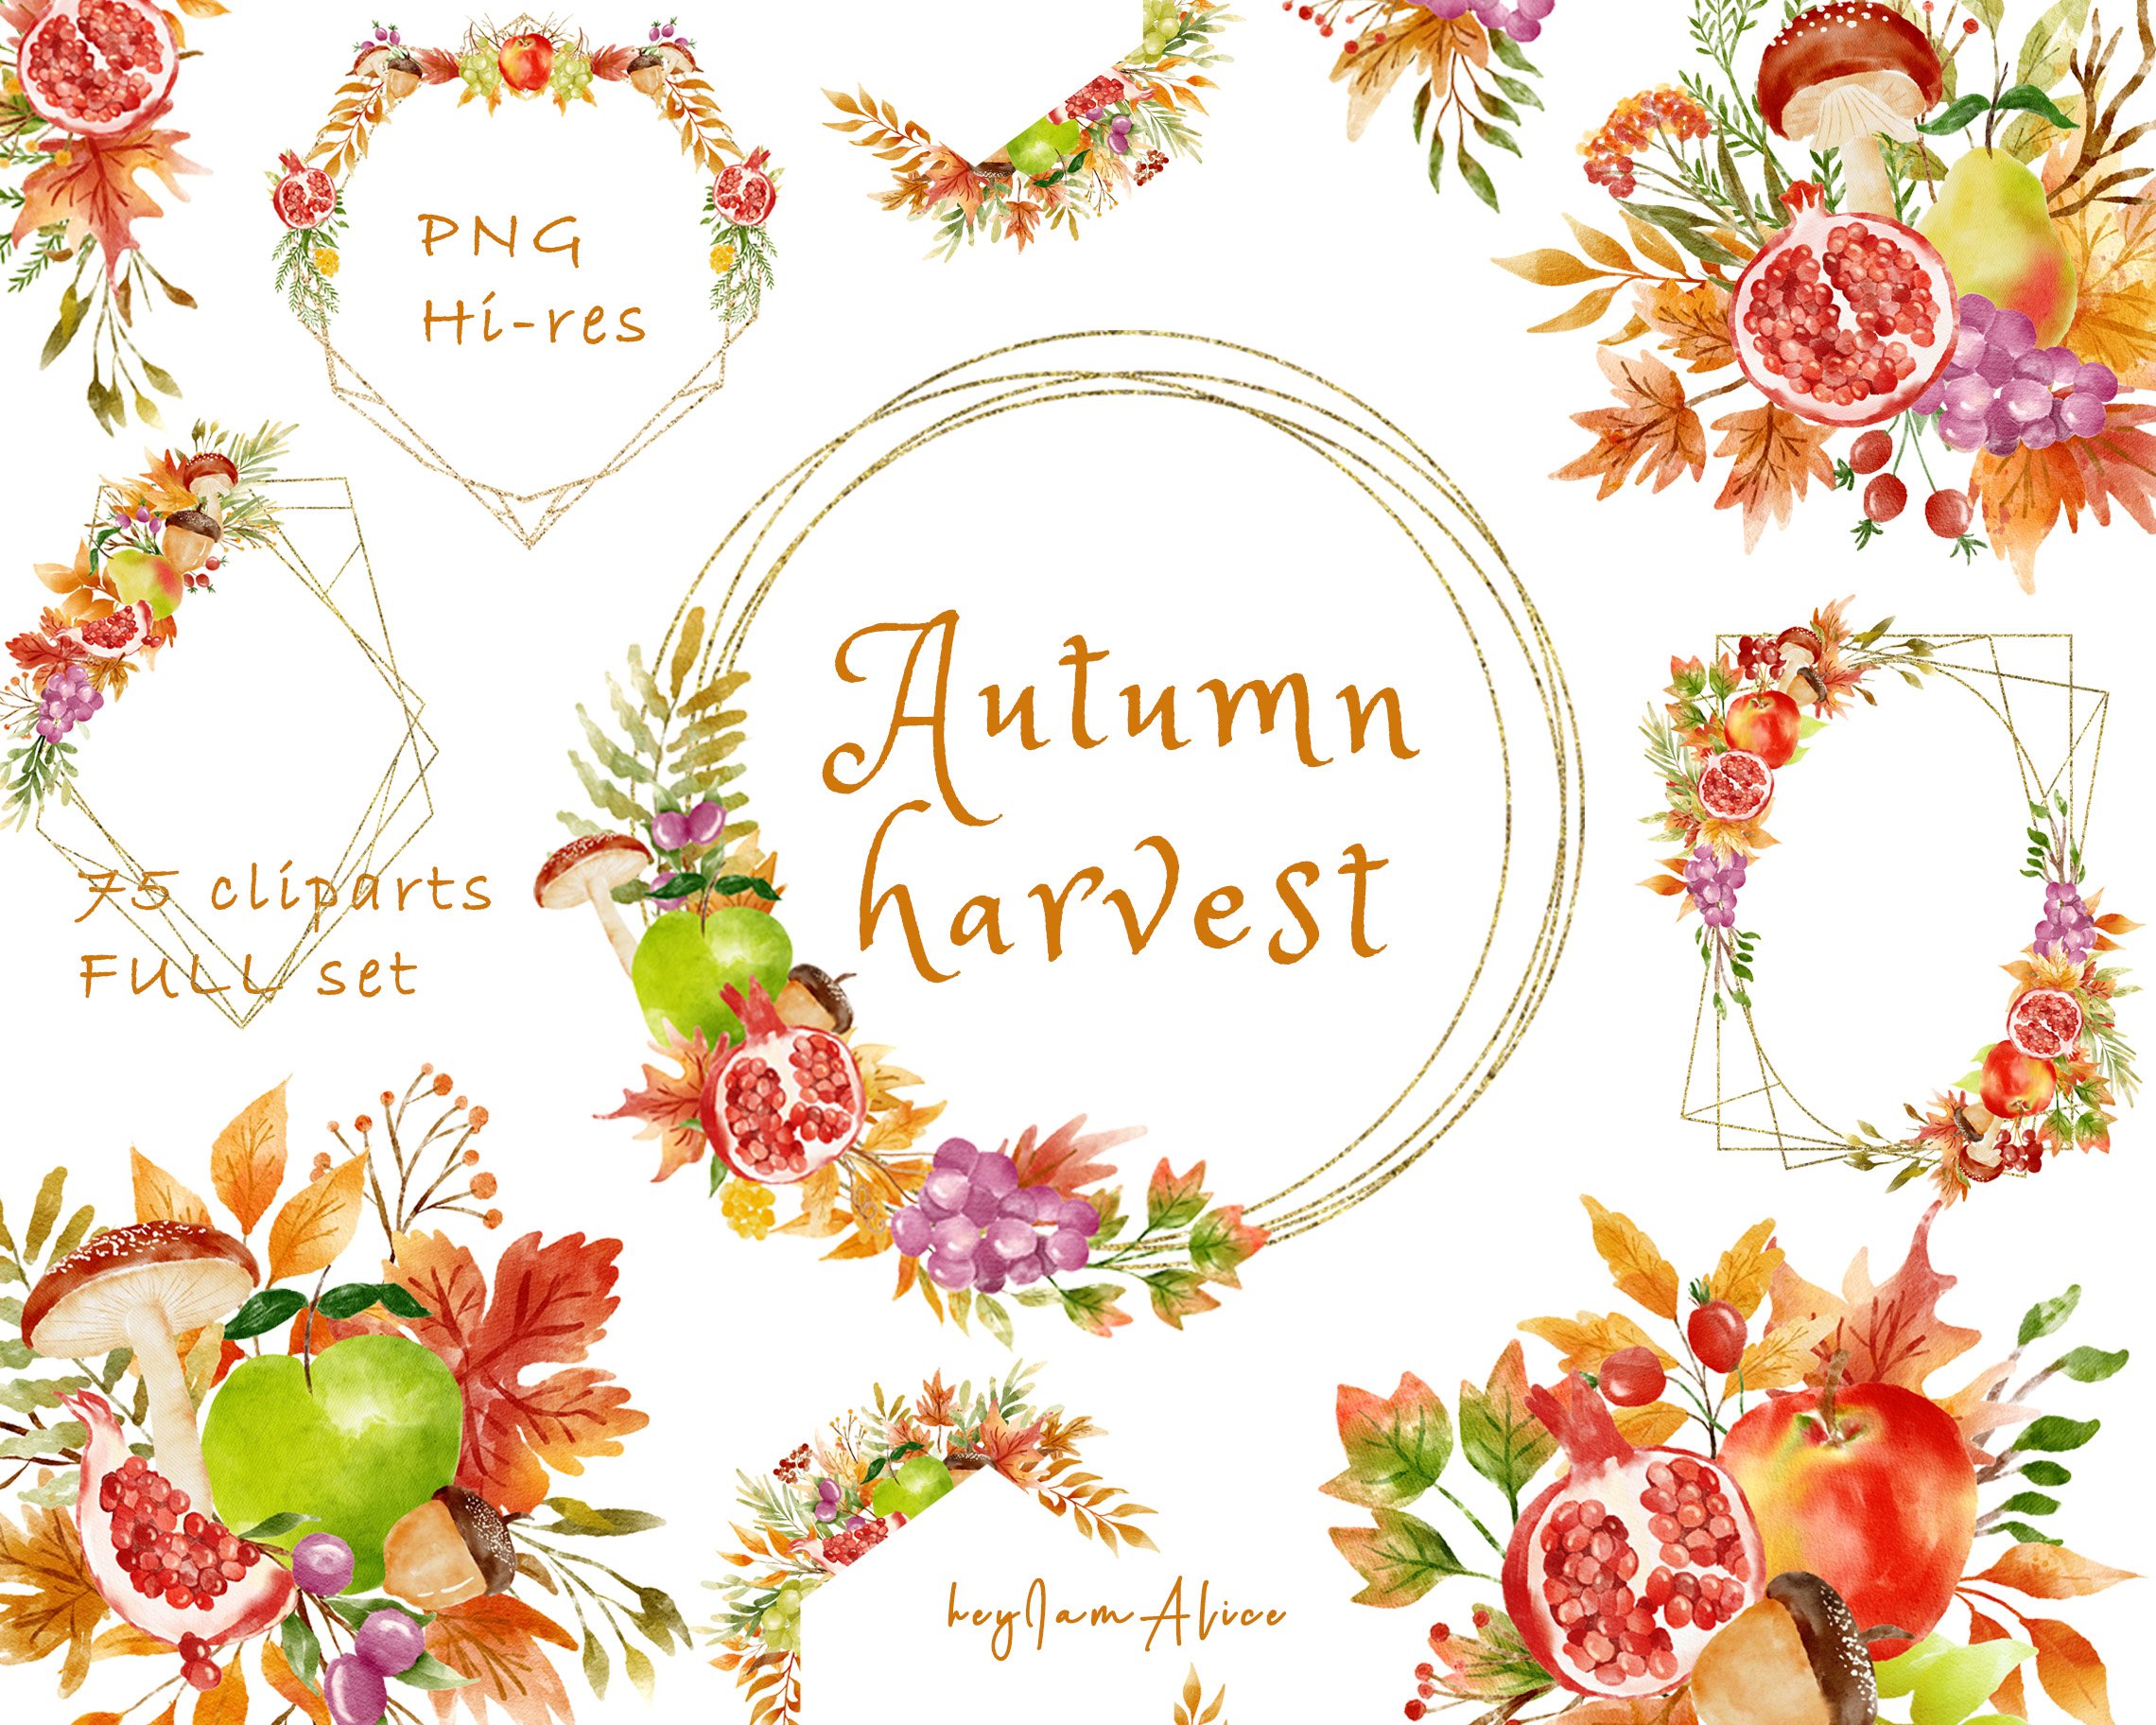 Autumn harvest clipart cover image.